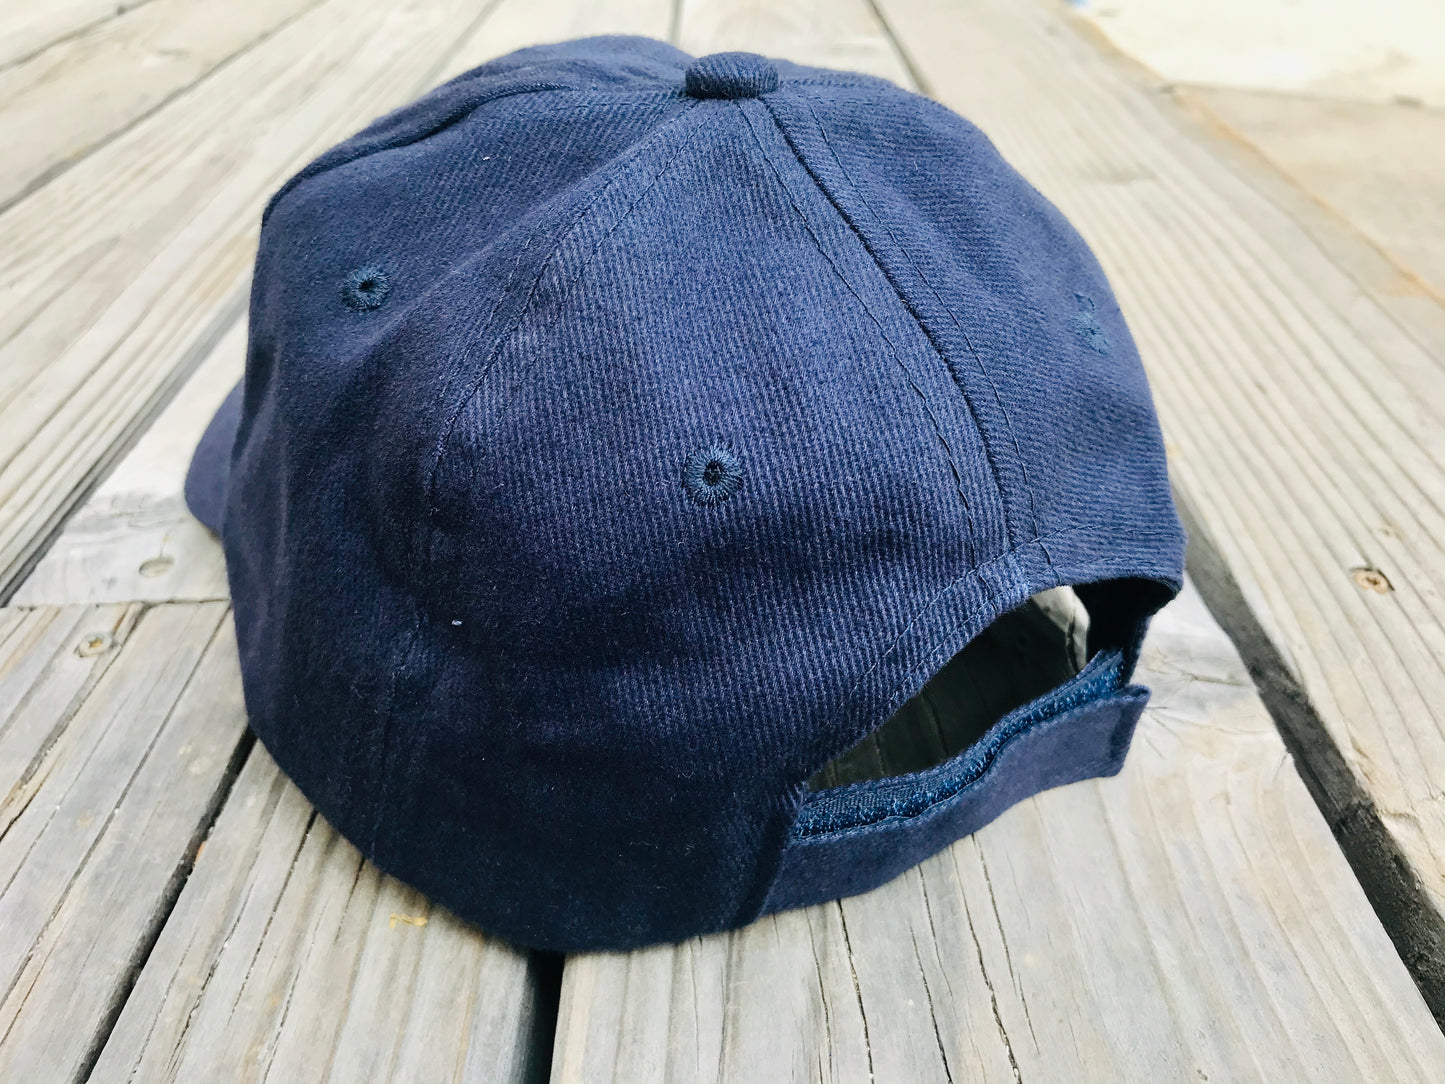 Oxnard soft cotton baseball cap